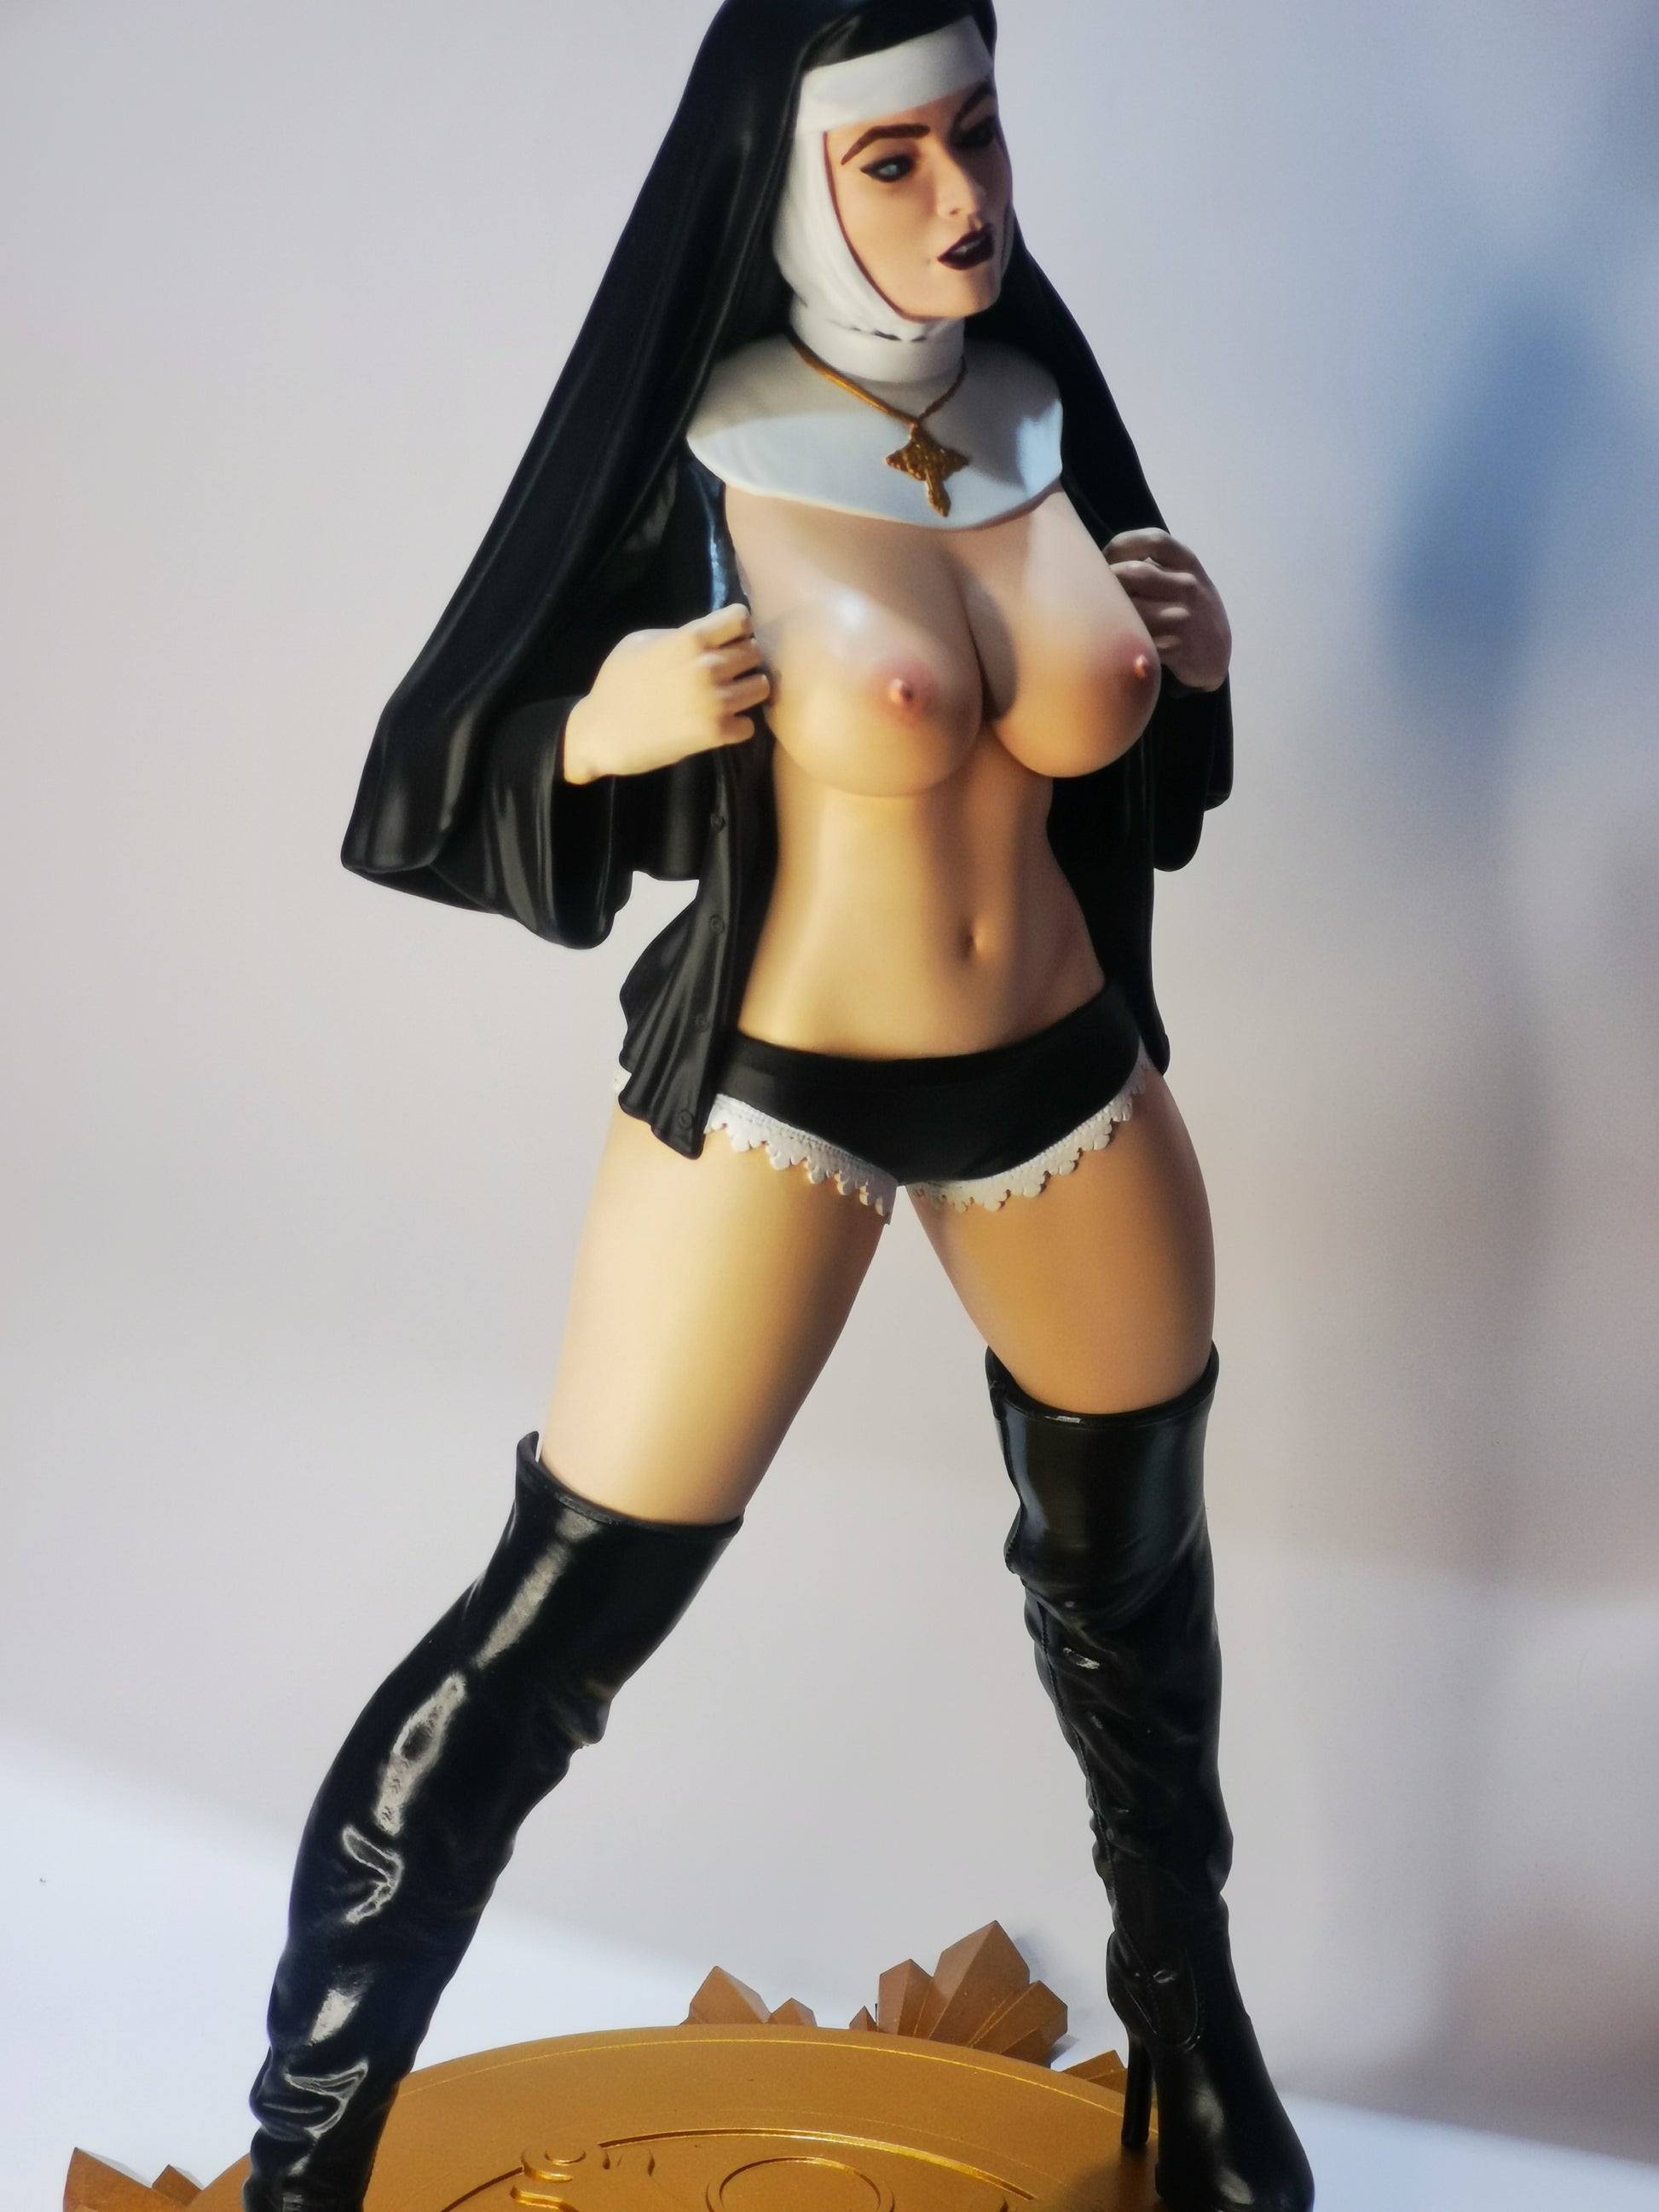 Beata a sexy nun NSFW 3D Printed figure Fanart by Torrida Minis